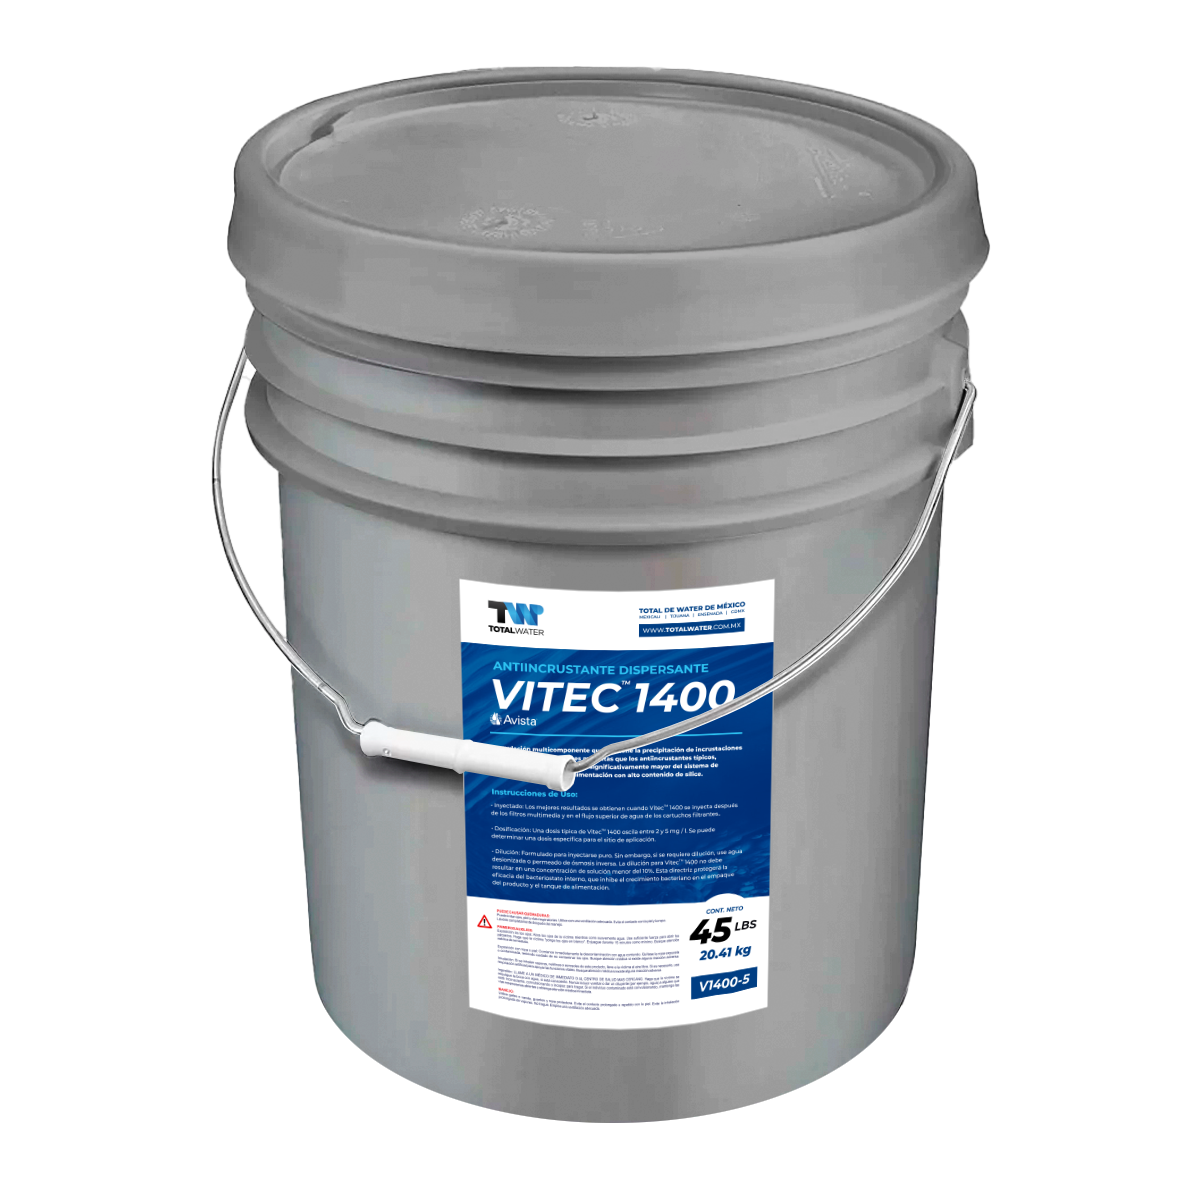 Anti-incrustante Dispersante - Vitec 1400 - 45 lbs (20.41 kg) - AVISTA